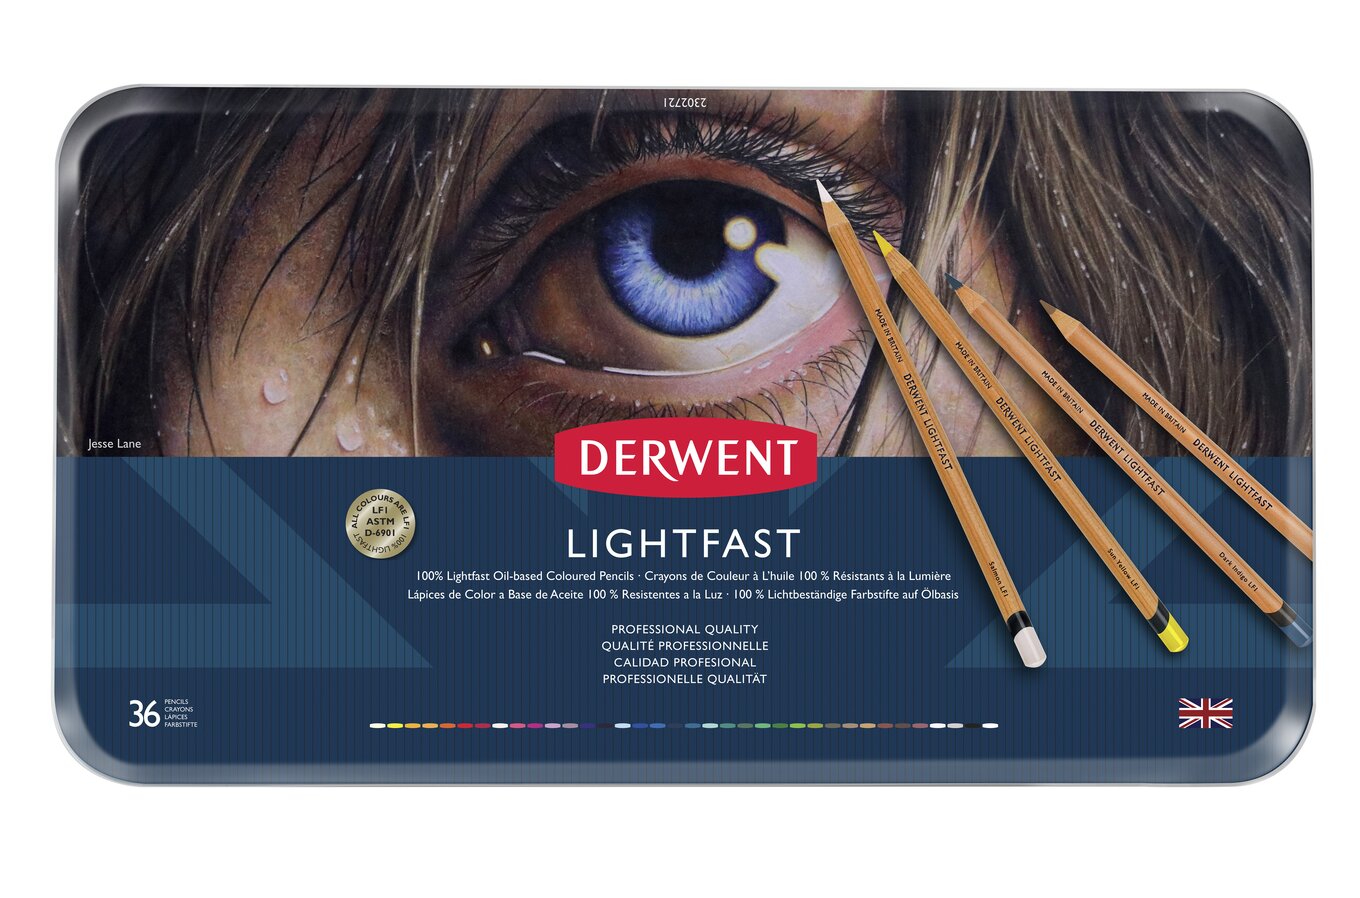 Derwent Lightfast Pencil Set, 100-Pencils with Wood Box